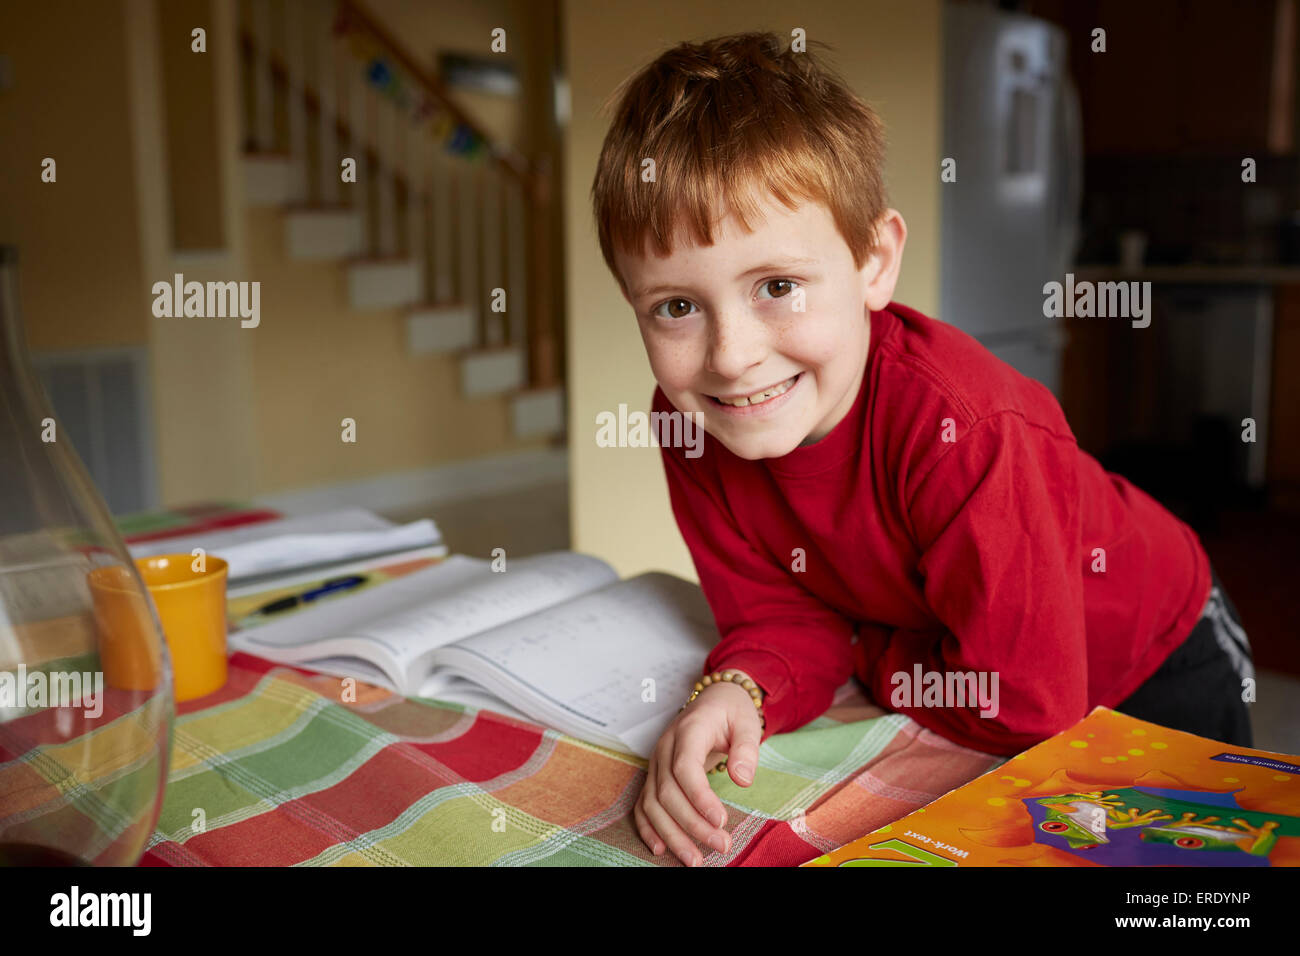 Caucasian boy doing homework at table Stock Photo